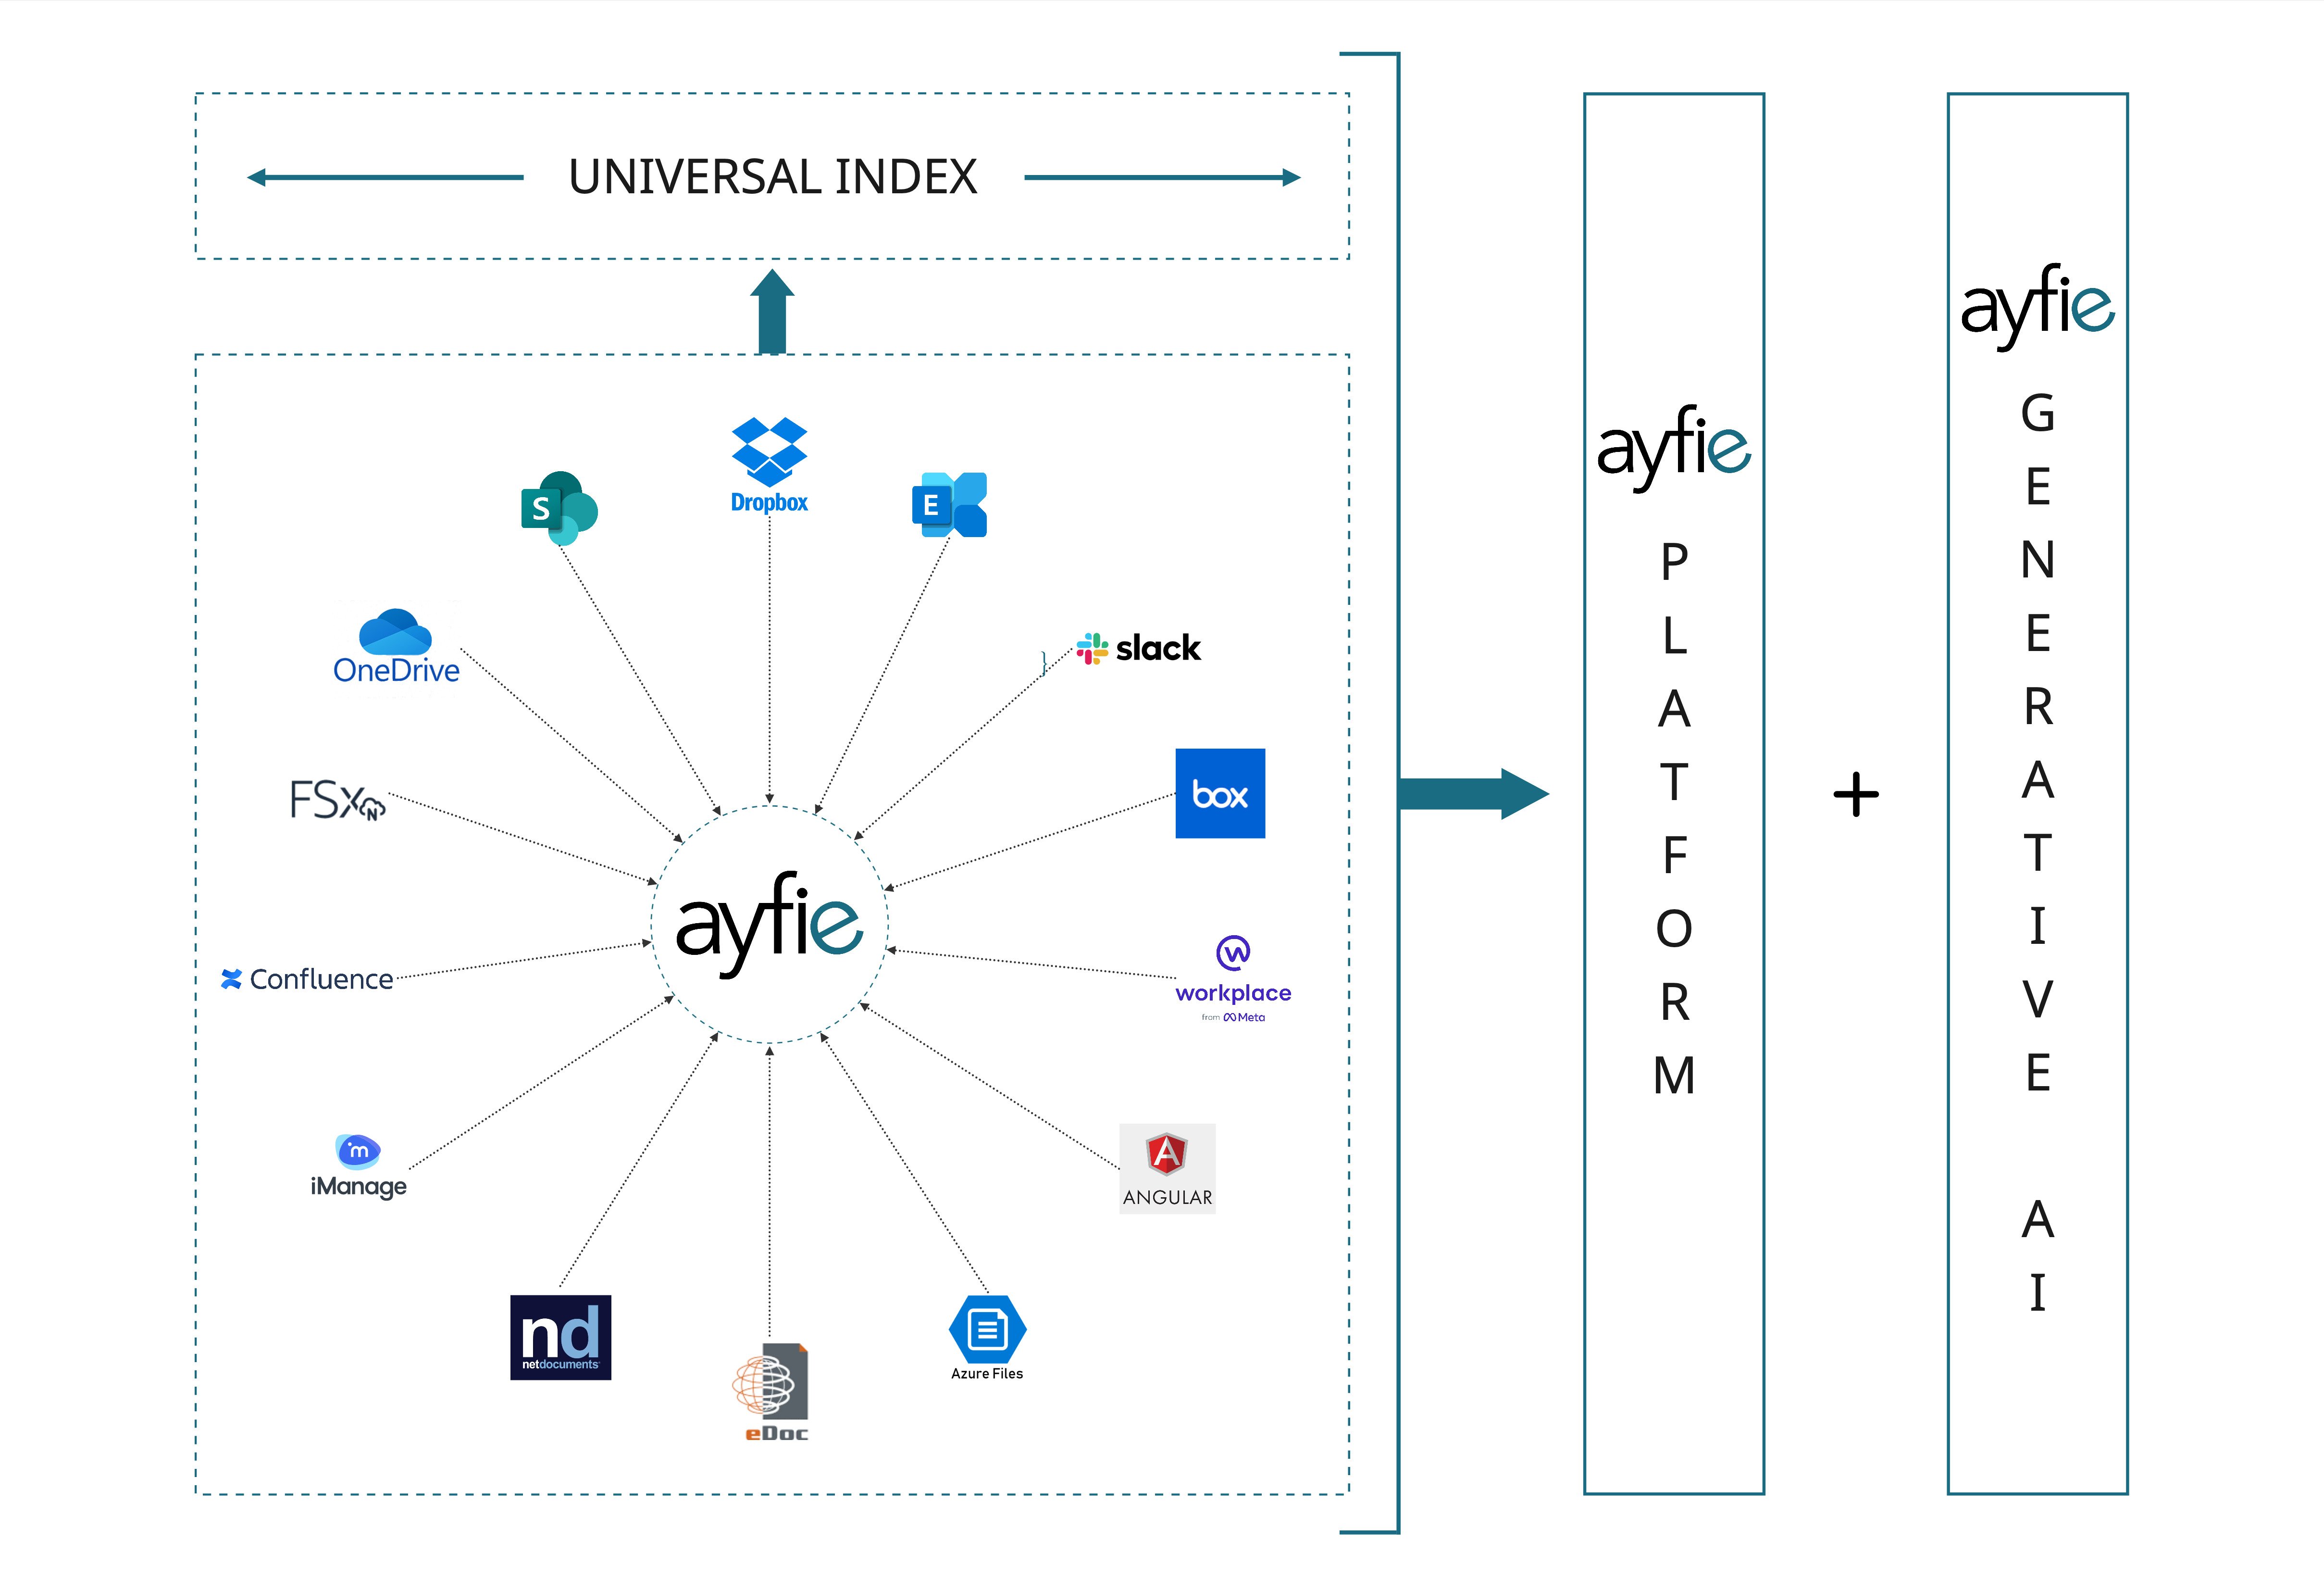 Visual explanation of the Ayfie Platform